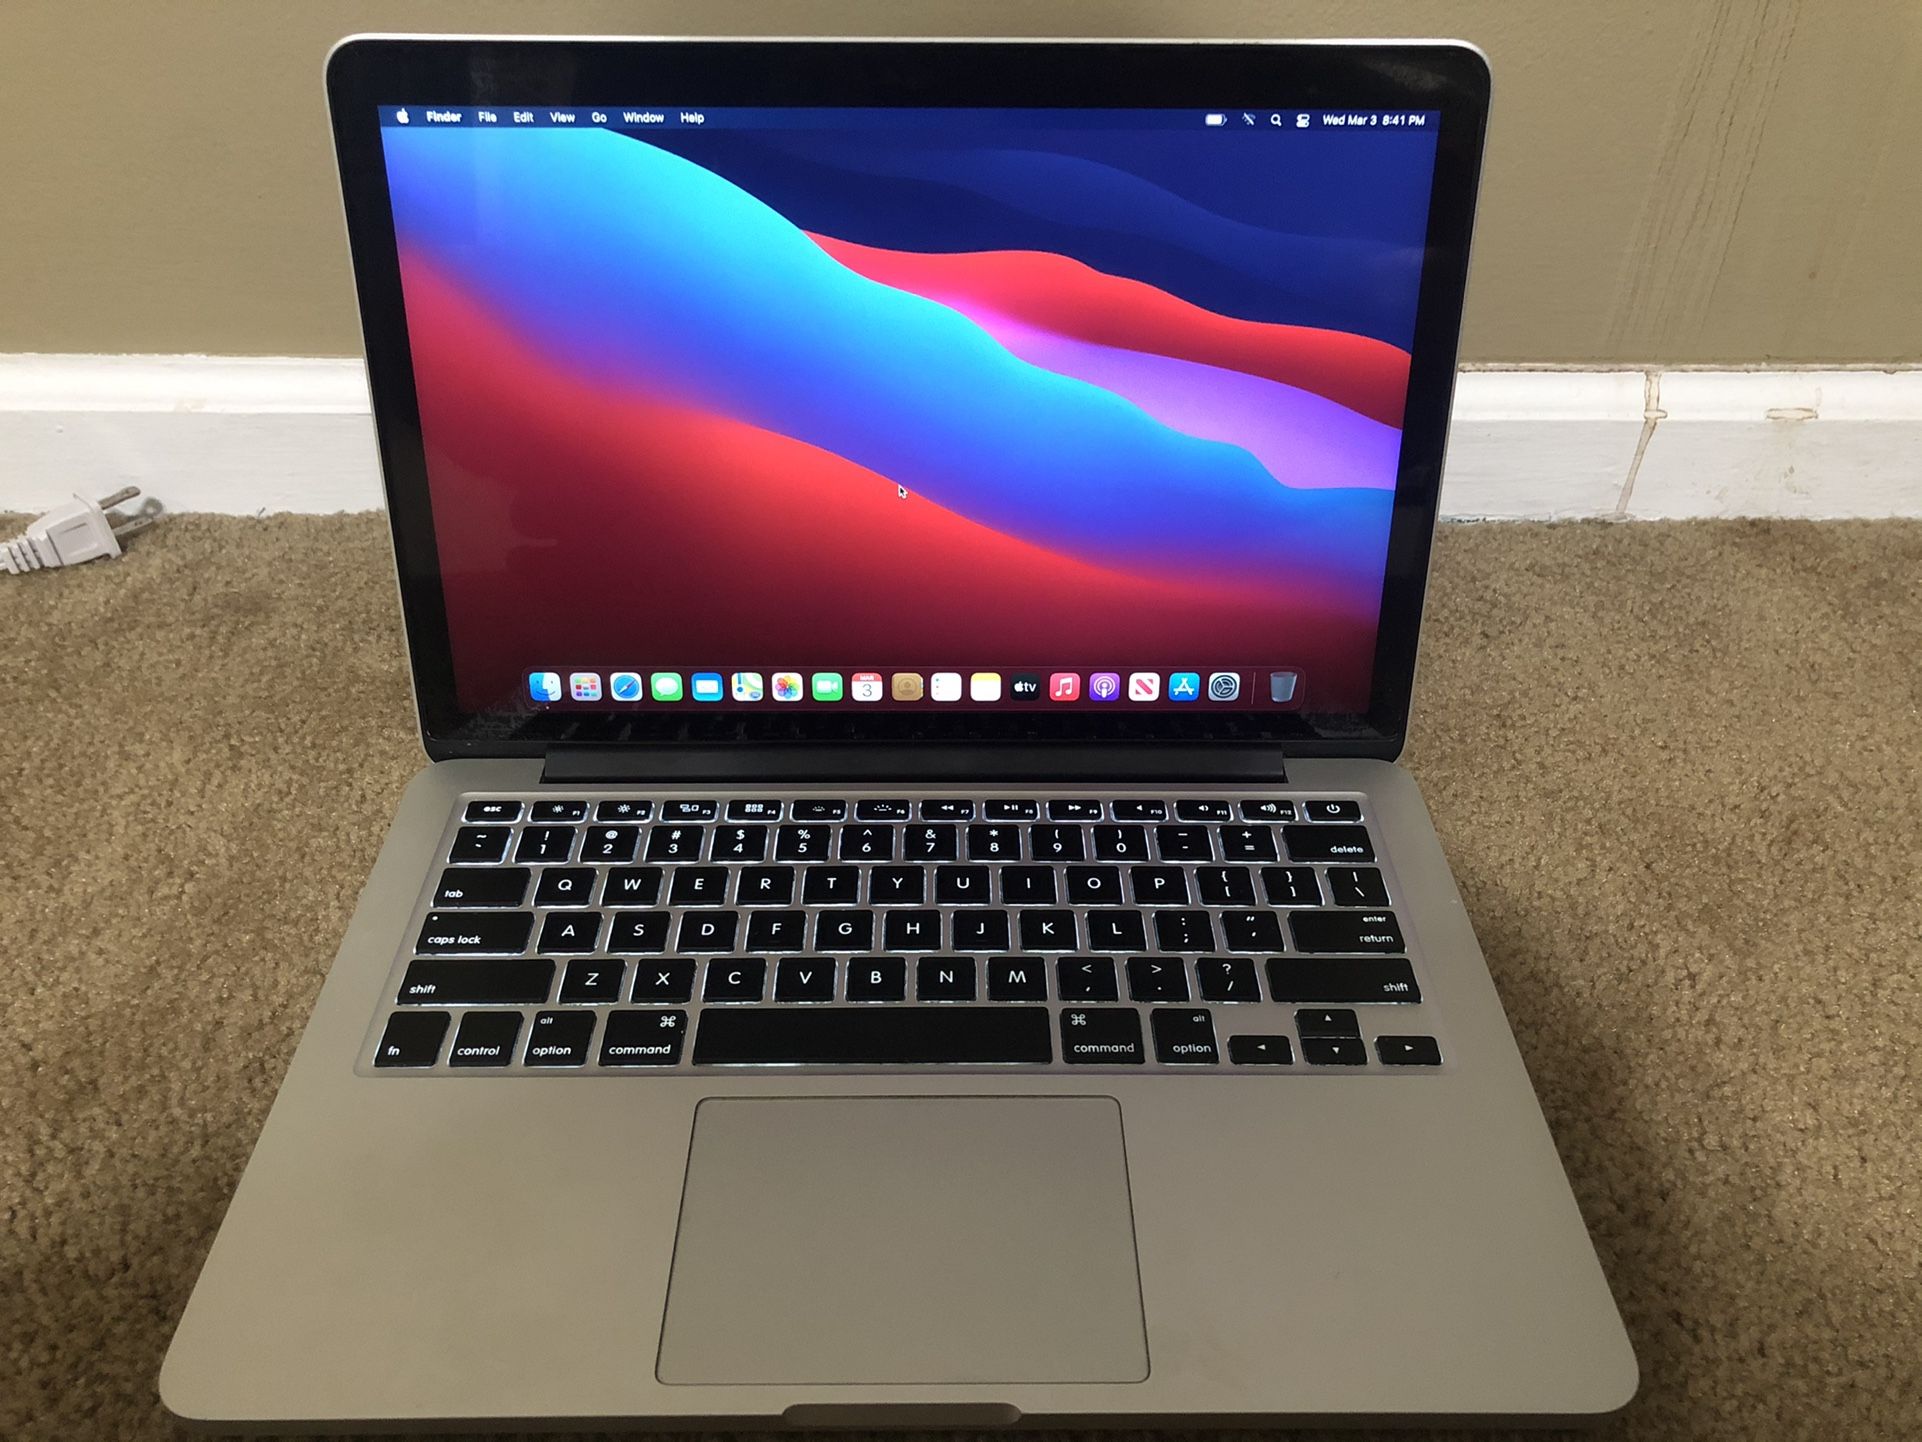 13” Macbook Pro - 2015 Retina Display